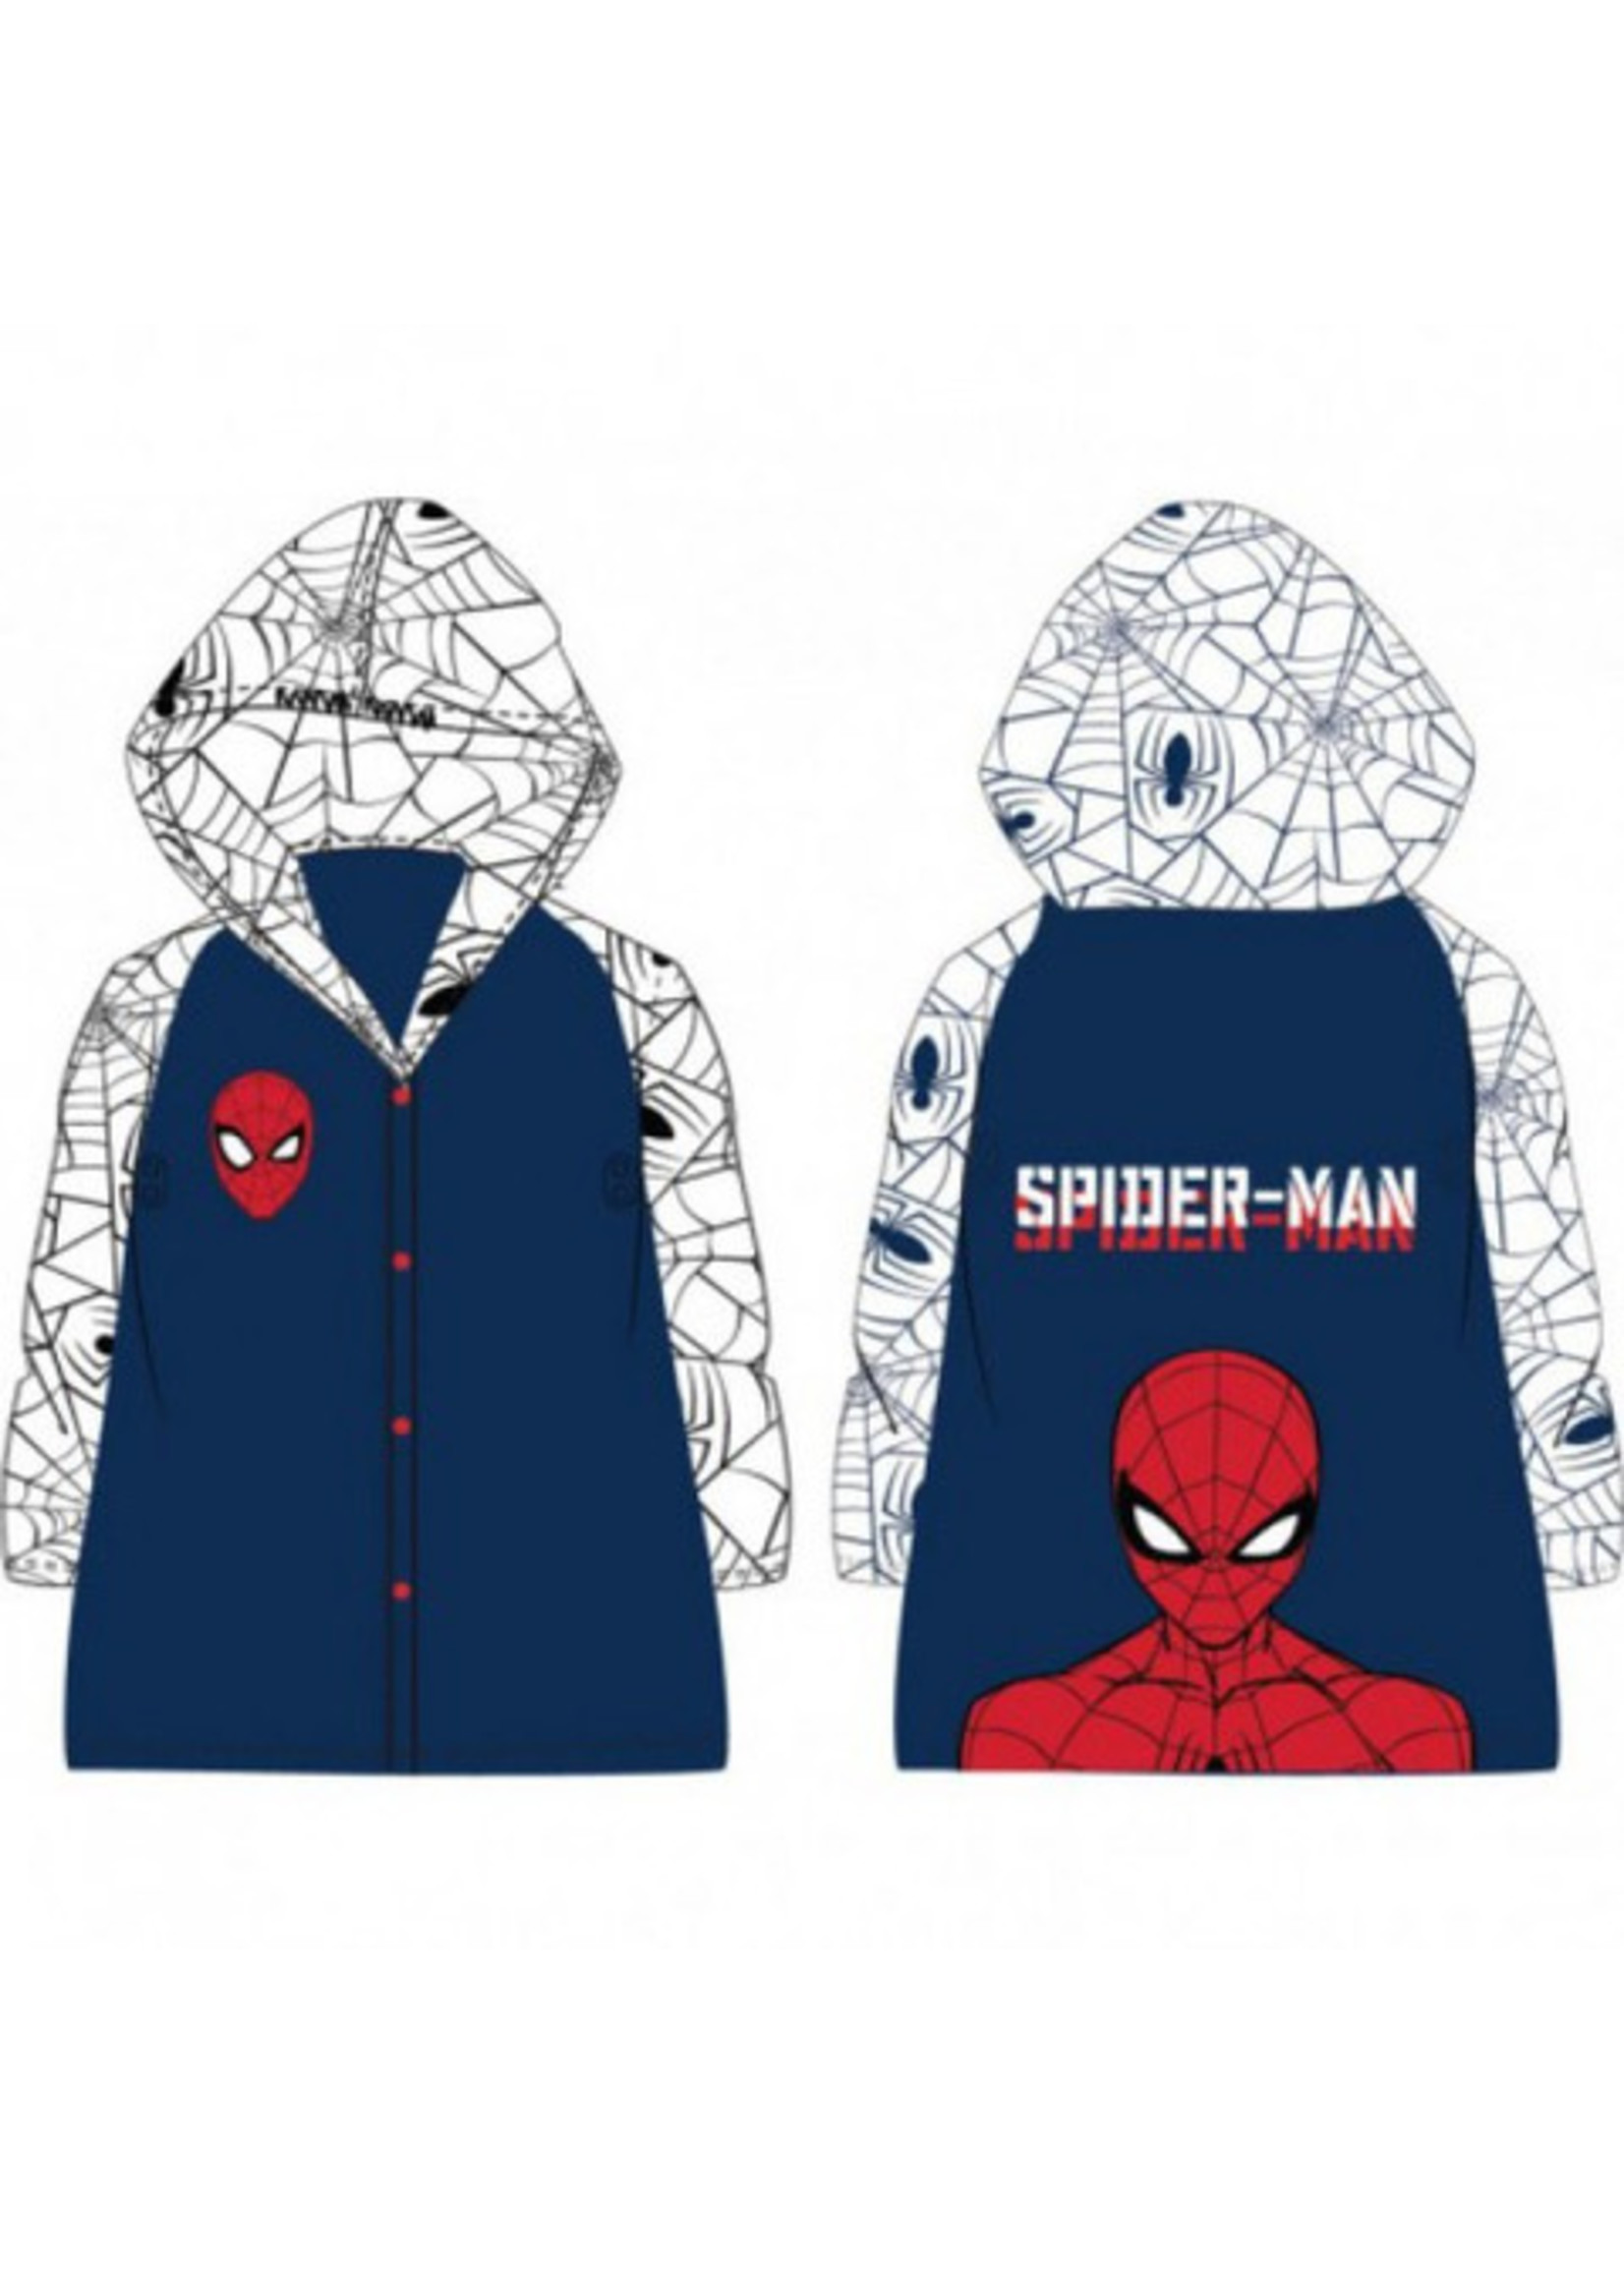 Marvel Spiderman regenjas van Marvel marineblauw